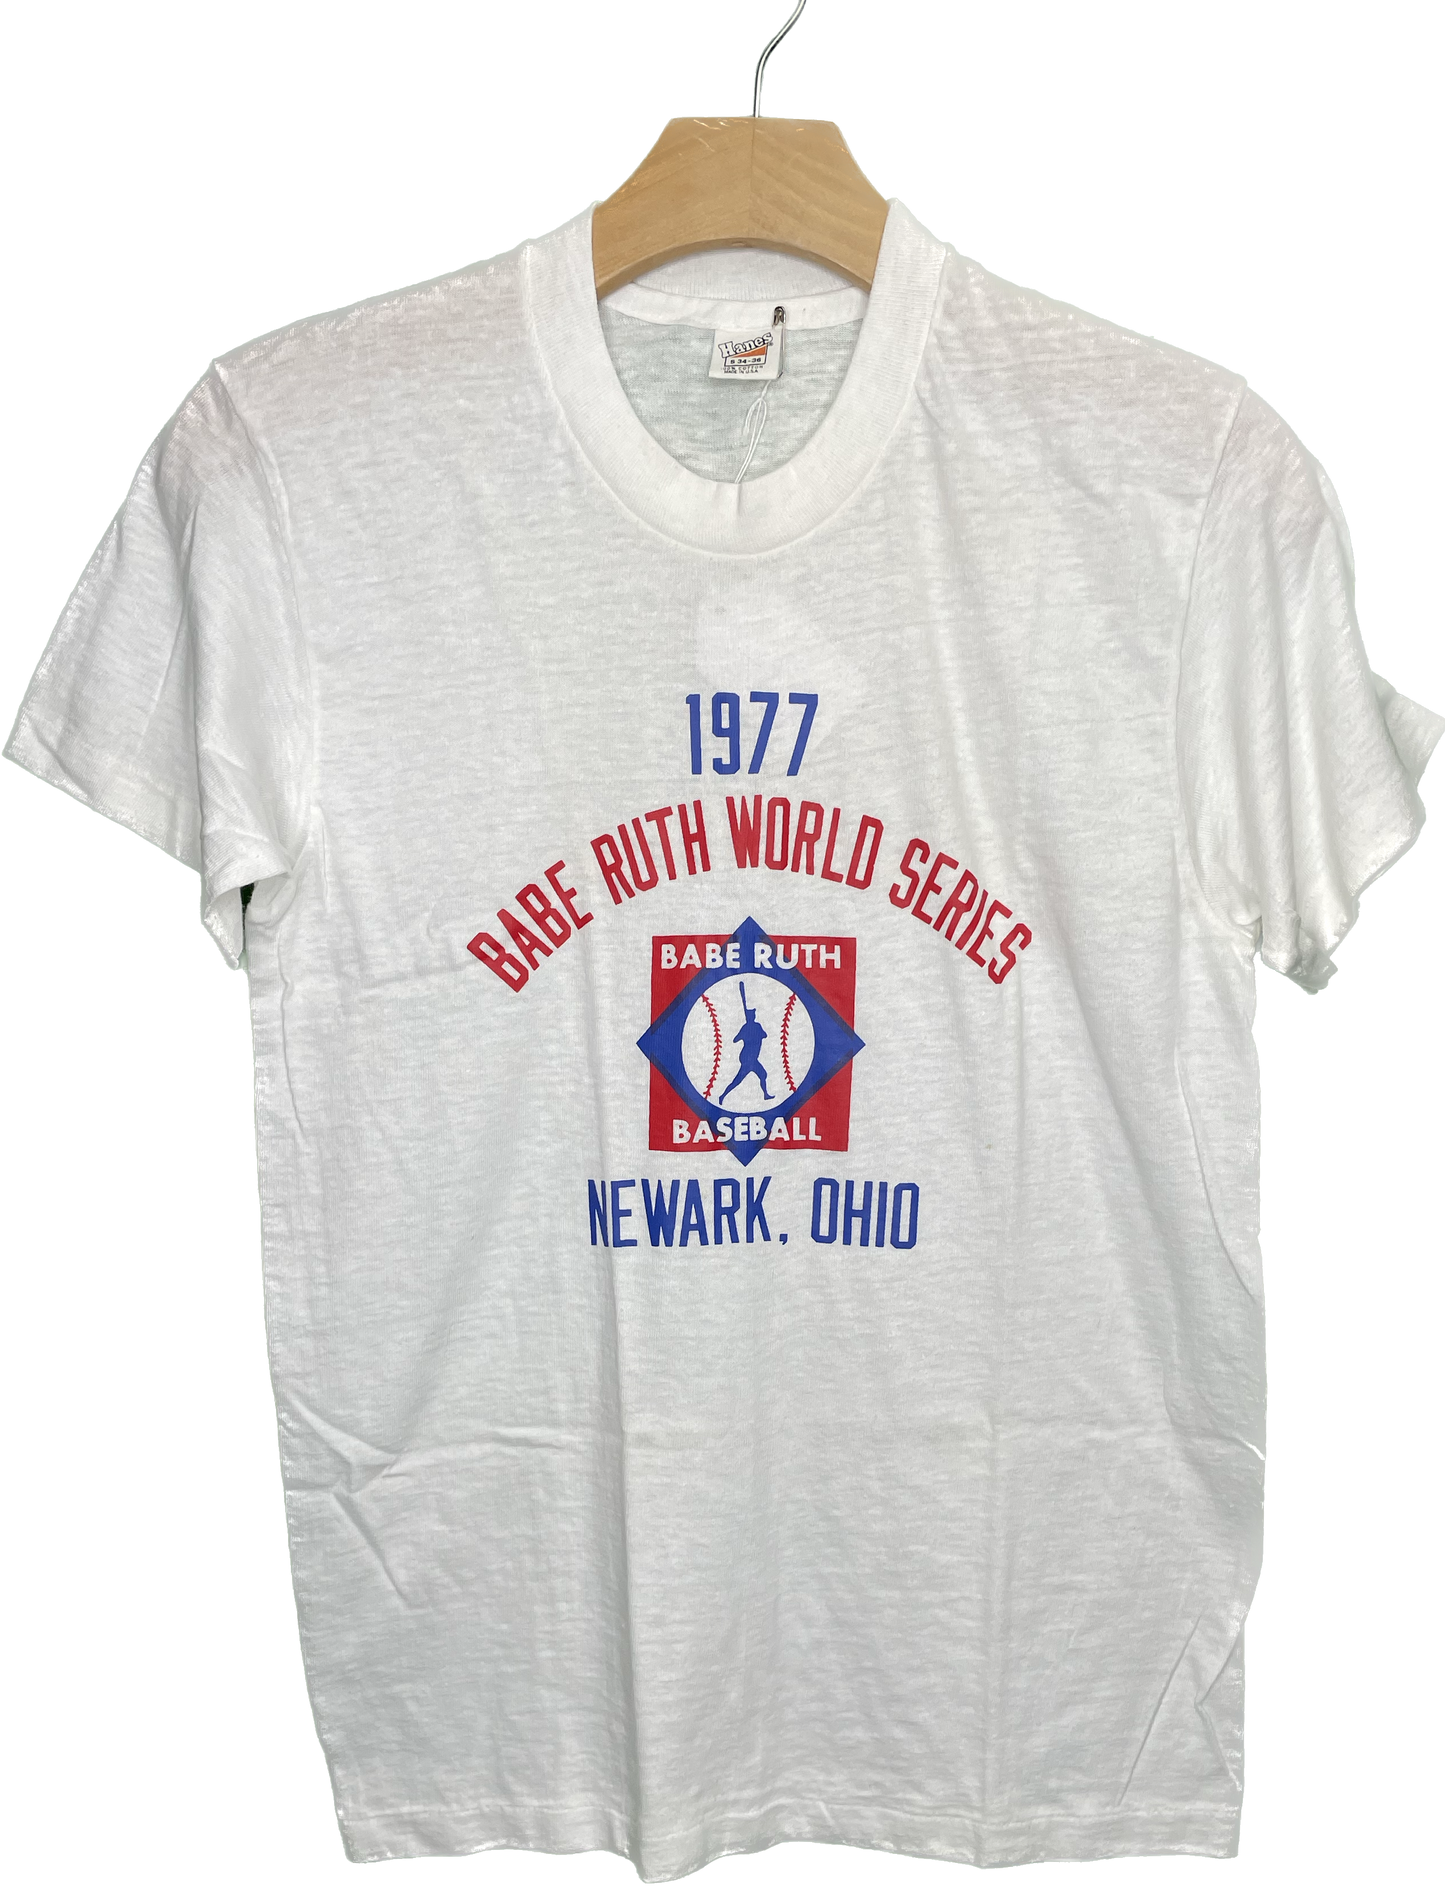 Vintage XS/S 70s Babe Ruth World Series Baseball Newark Ohio T-Shirt